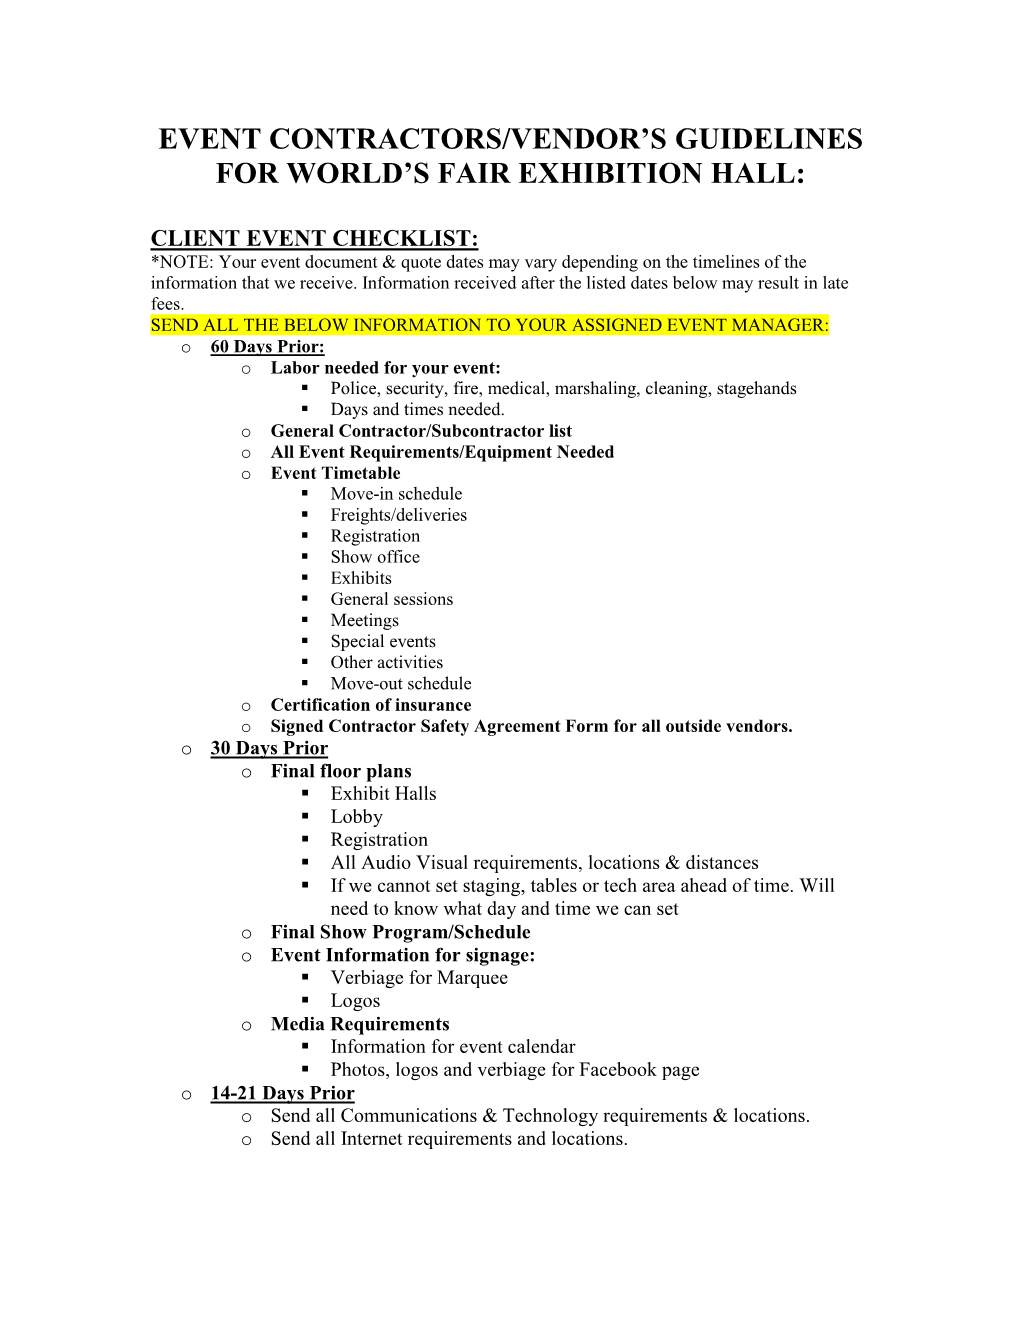 Event Contractors/Vendor's Guidelines for World's Fair